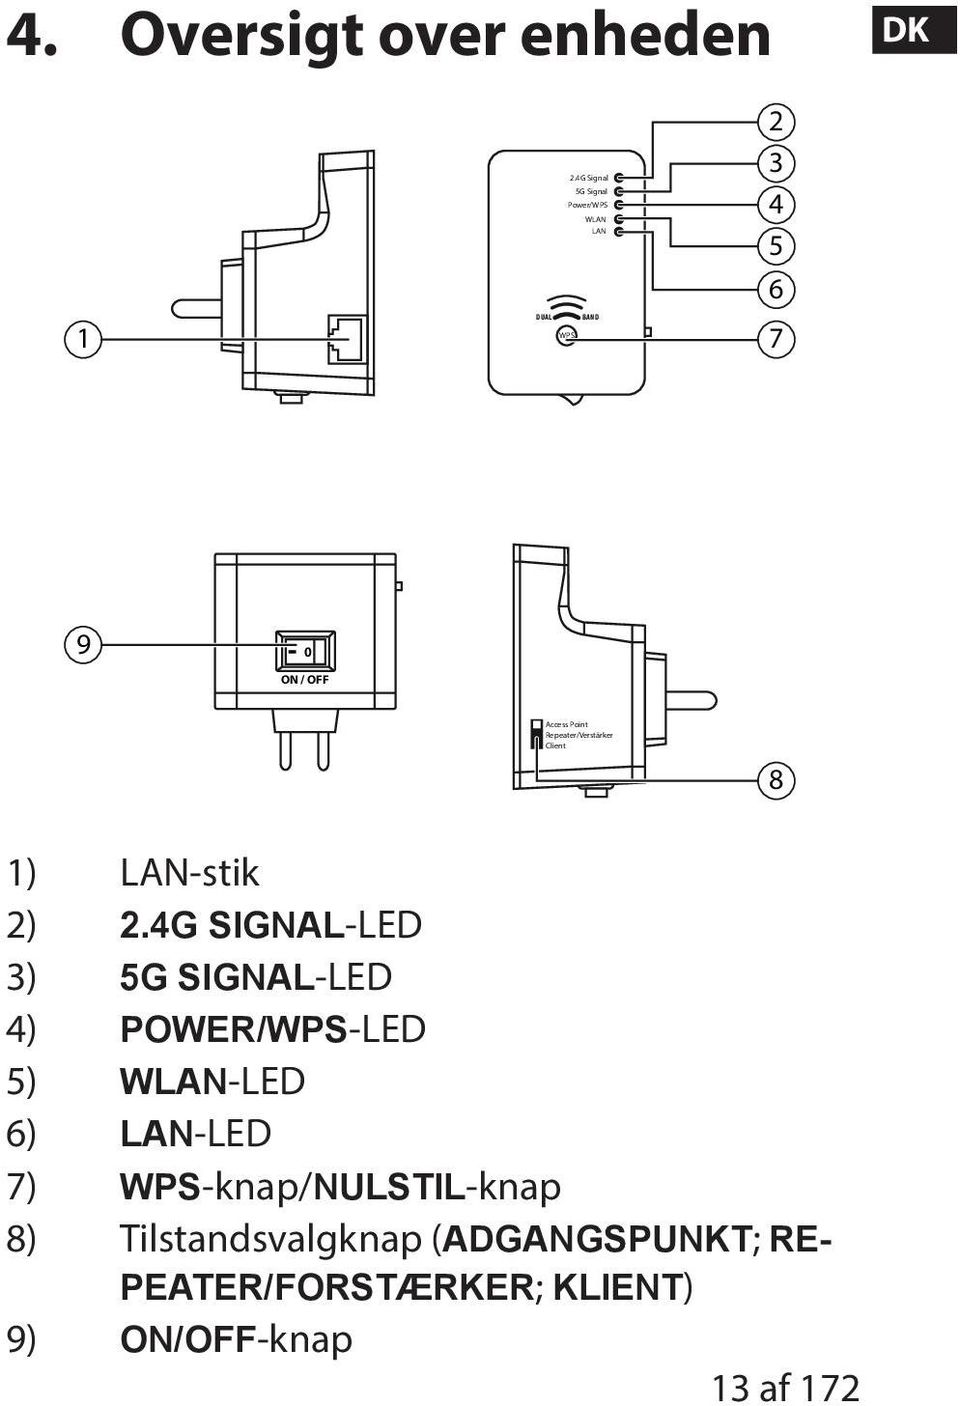 Point Repeater/Verstärker Client 8 1) LAN-stik 2) 406I"UKIPCN-LED 3) 7I"UKIPCN-LED 4)